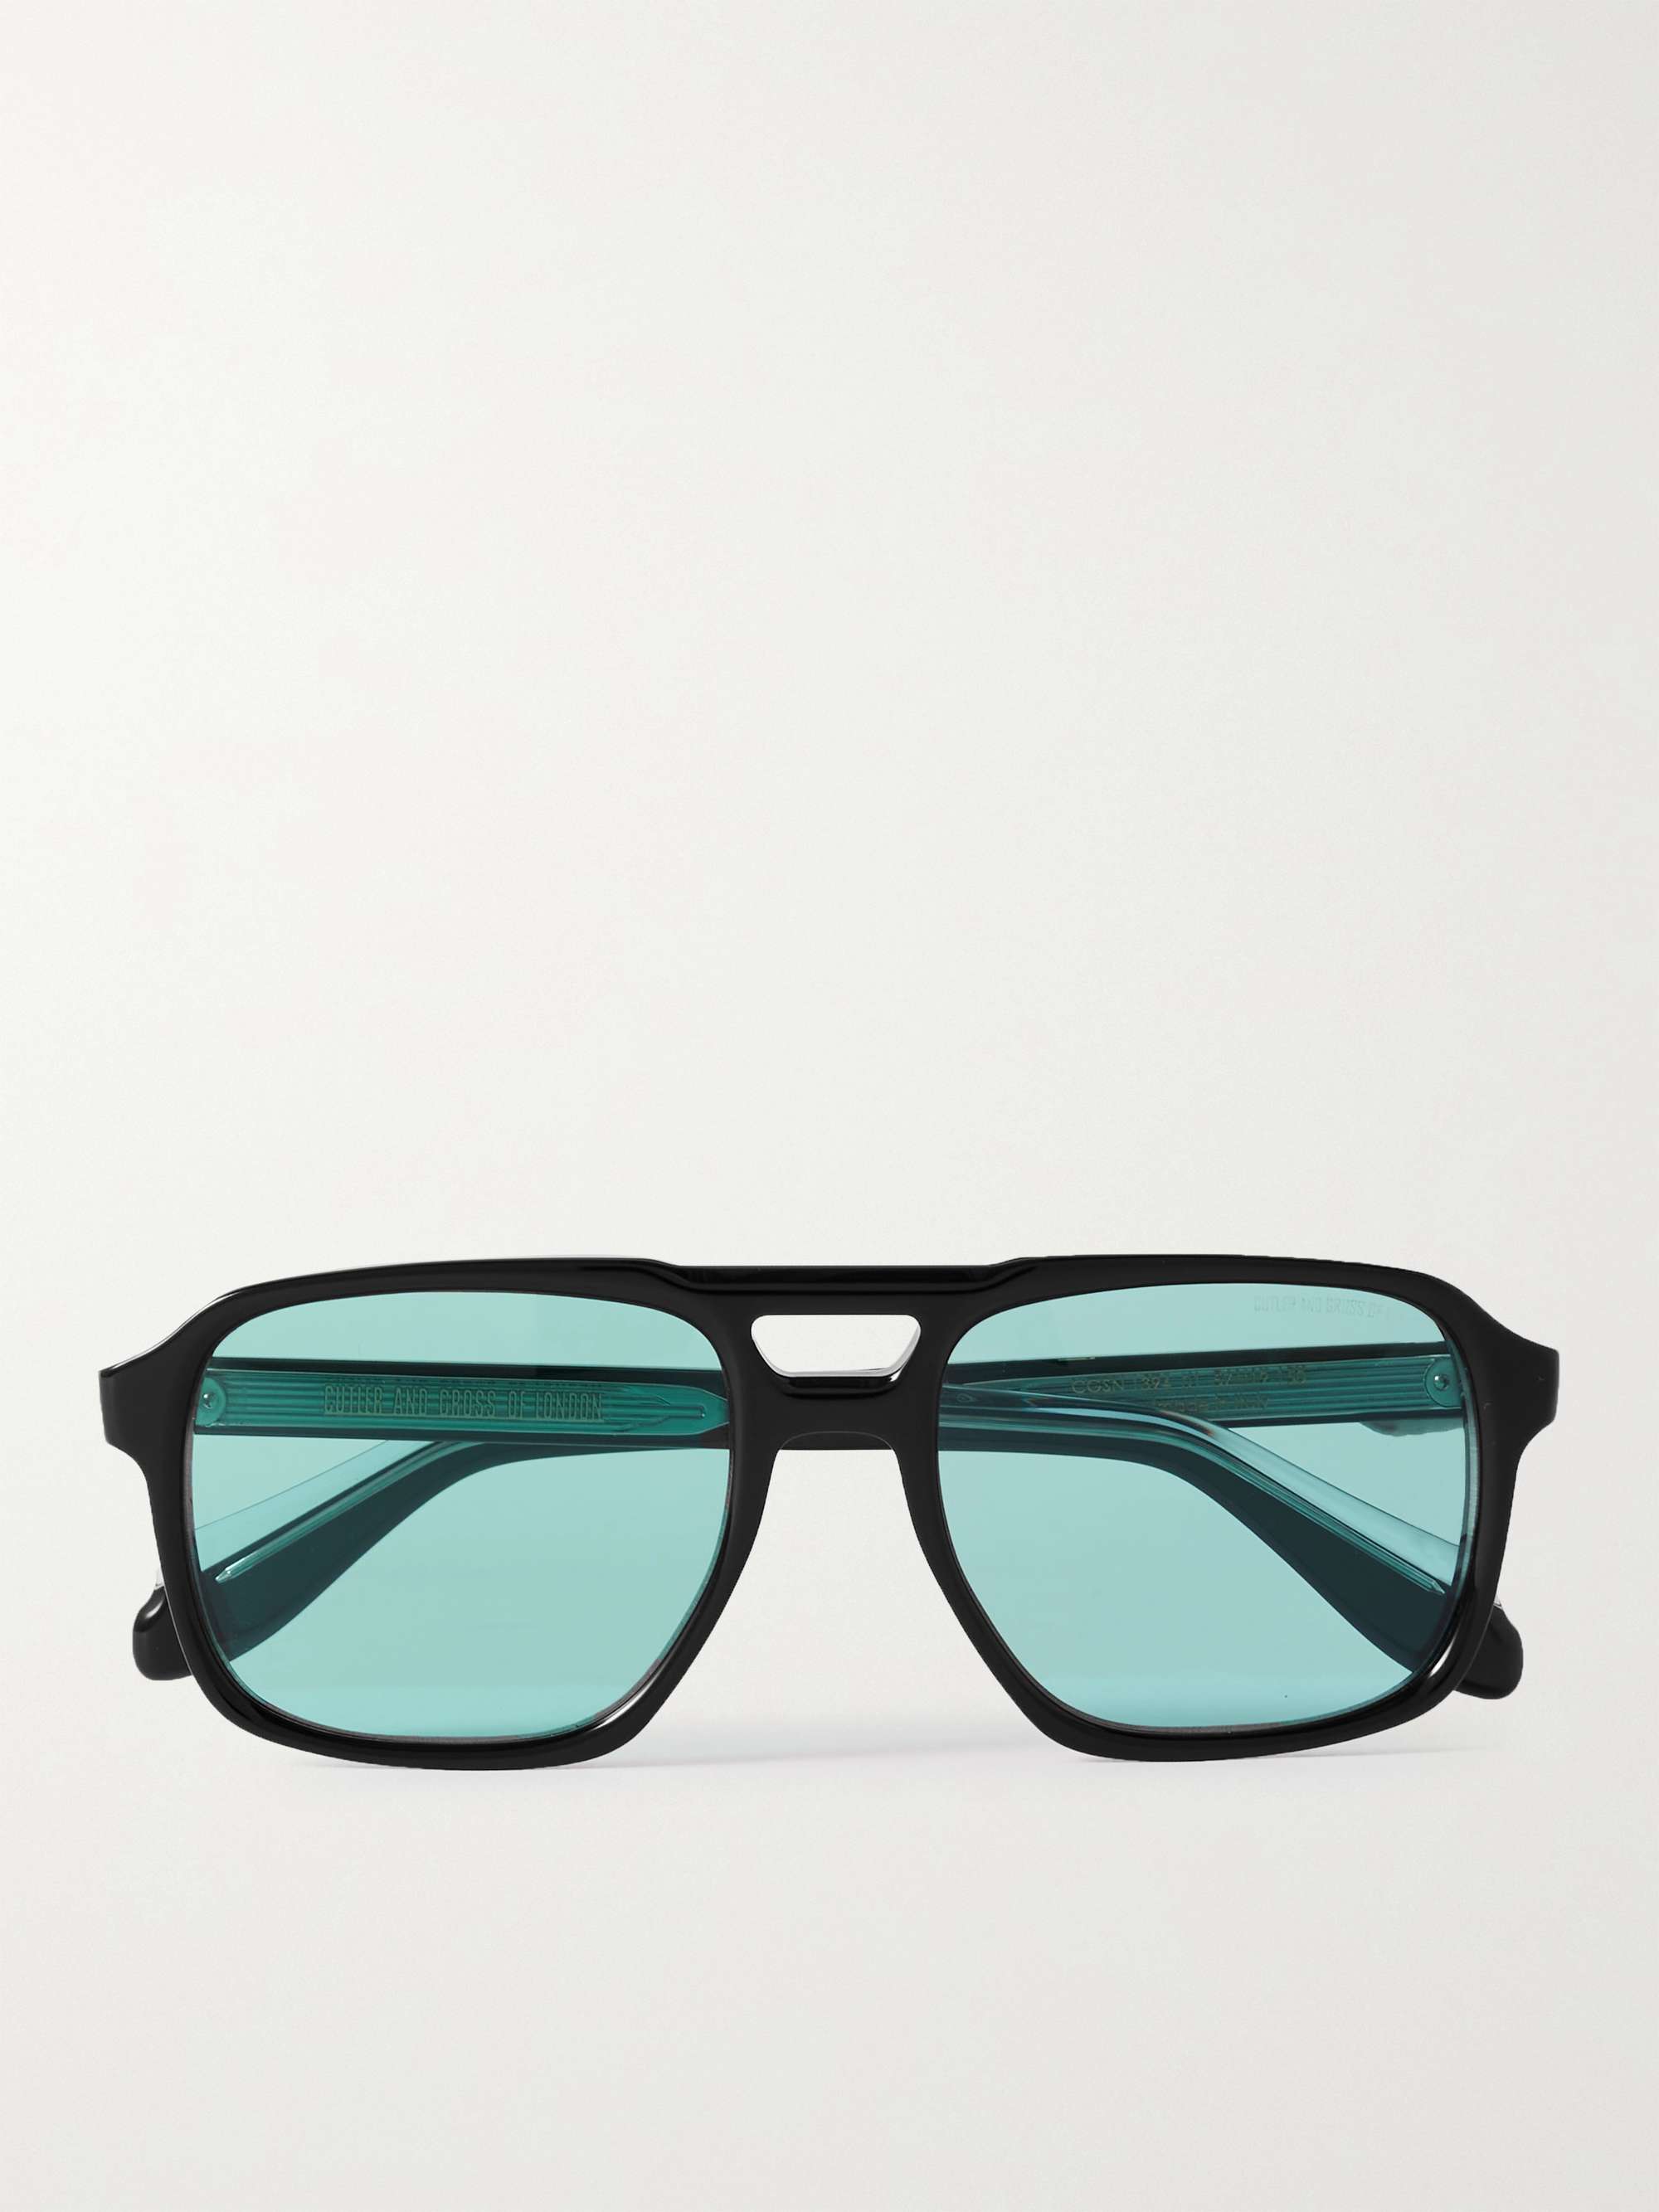 CUTLER AND GROSS 1394 Aviator-Style Acetate Sunglasses